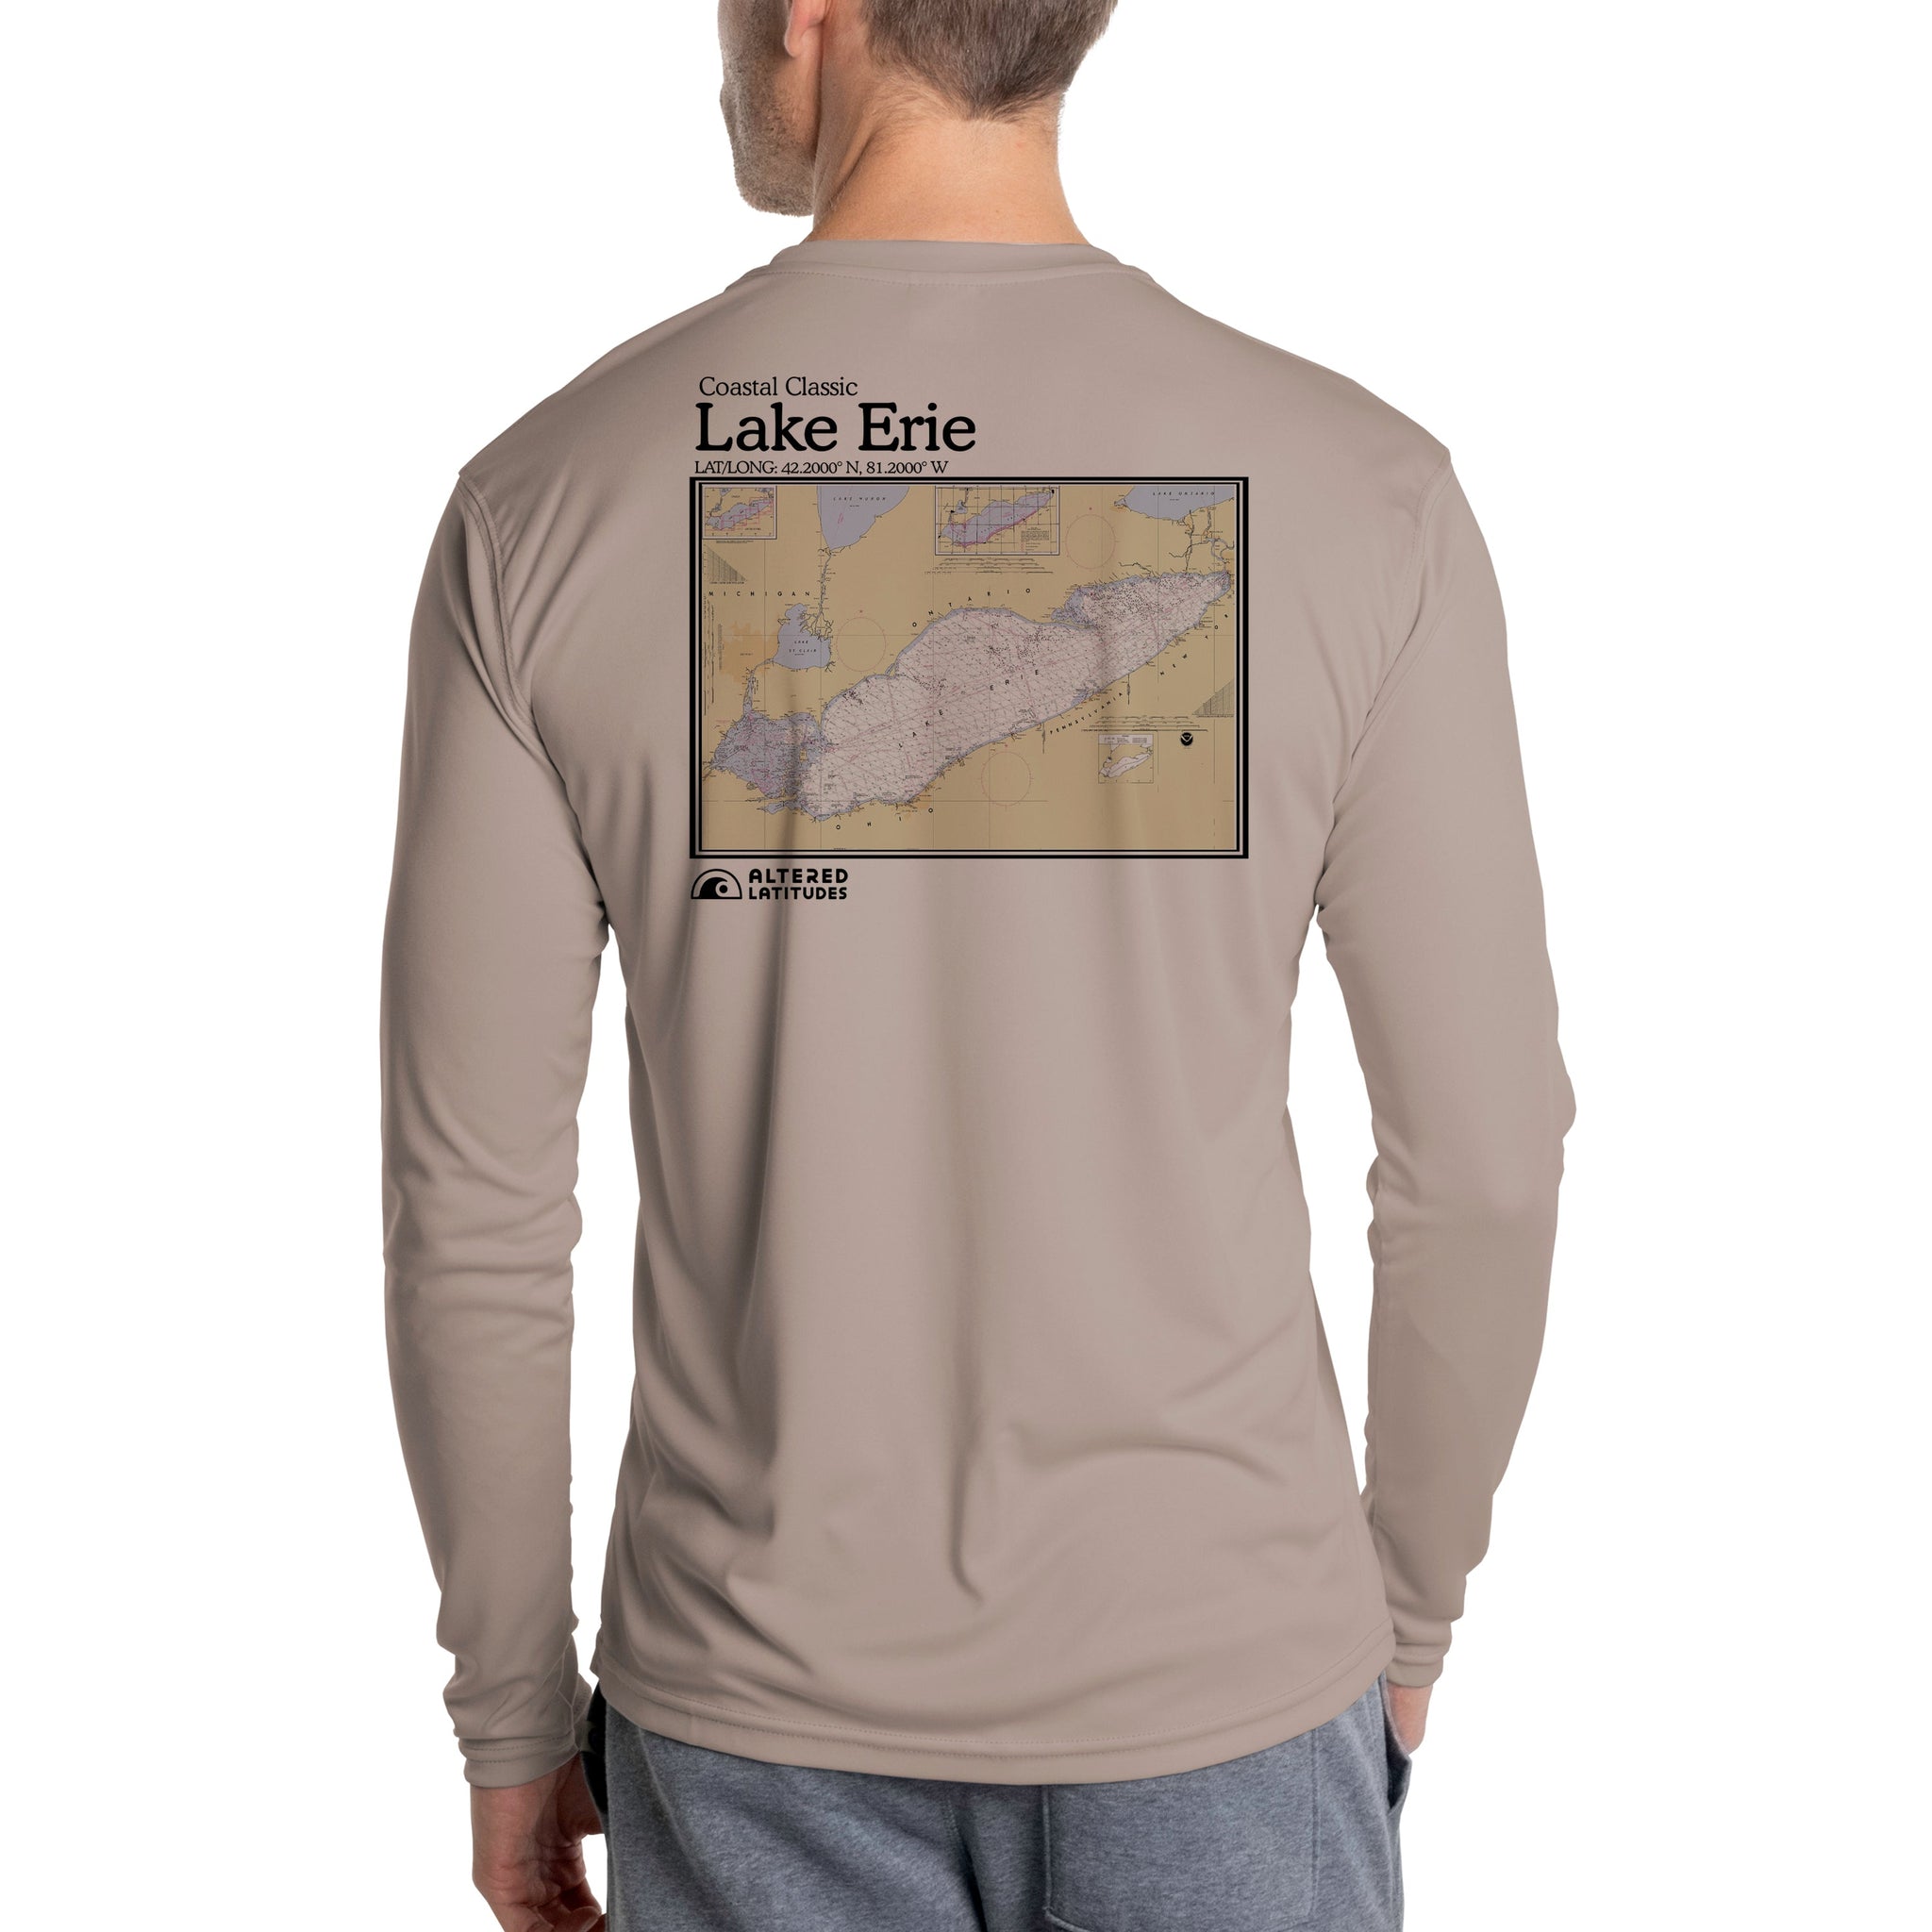 Coastal Classics Lake Erie Men's UPF 50 Long Sleeve